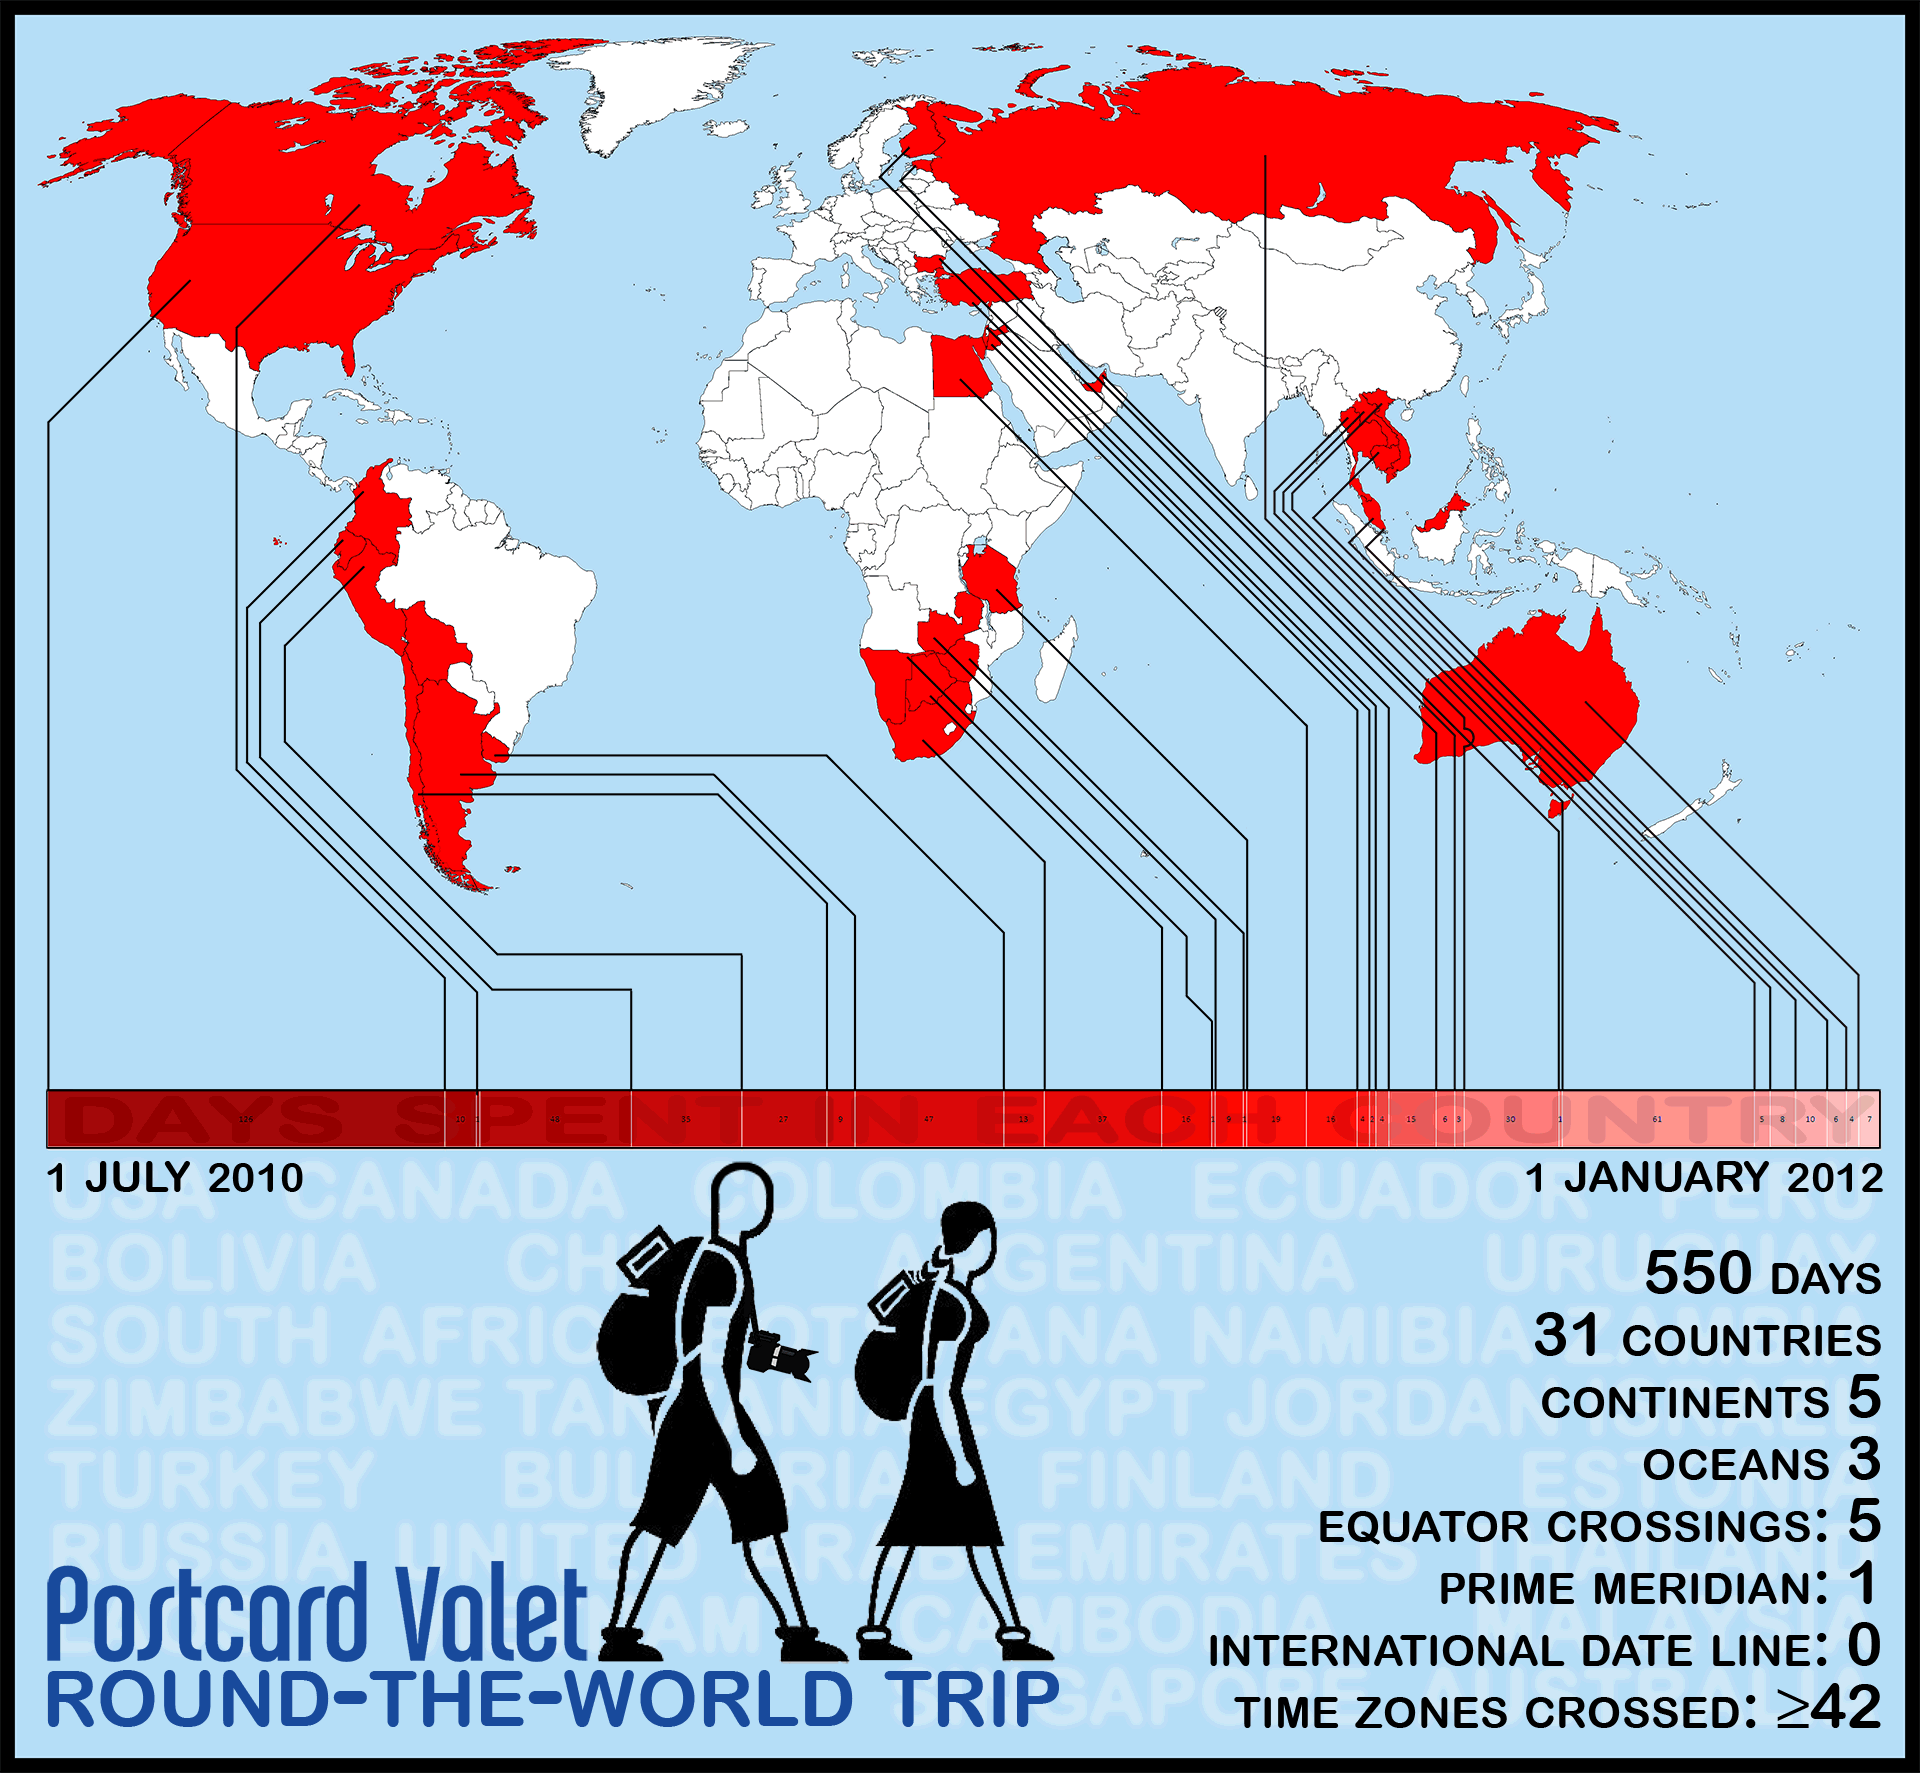 Postcard Valet Infographic